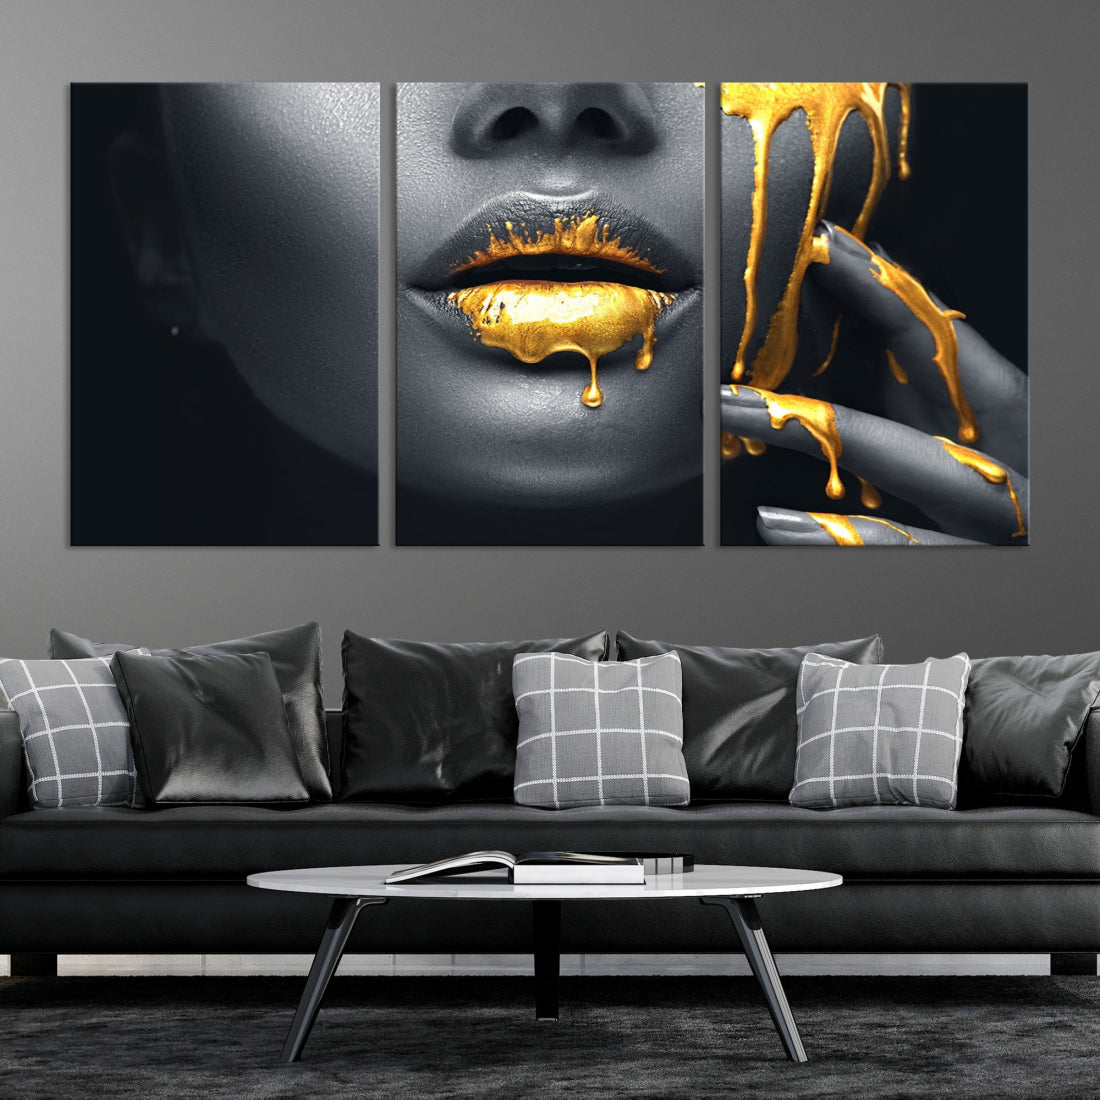 Gold Lips and Black Woman Makeup Canvas Wall Art Print Canvas Art Lips Print Fashion Beauty Extra Large Split Canvas Art Framed